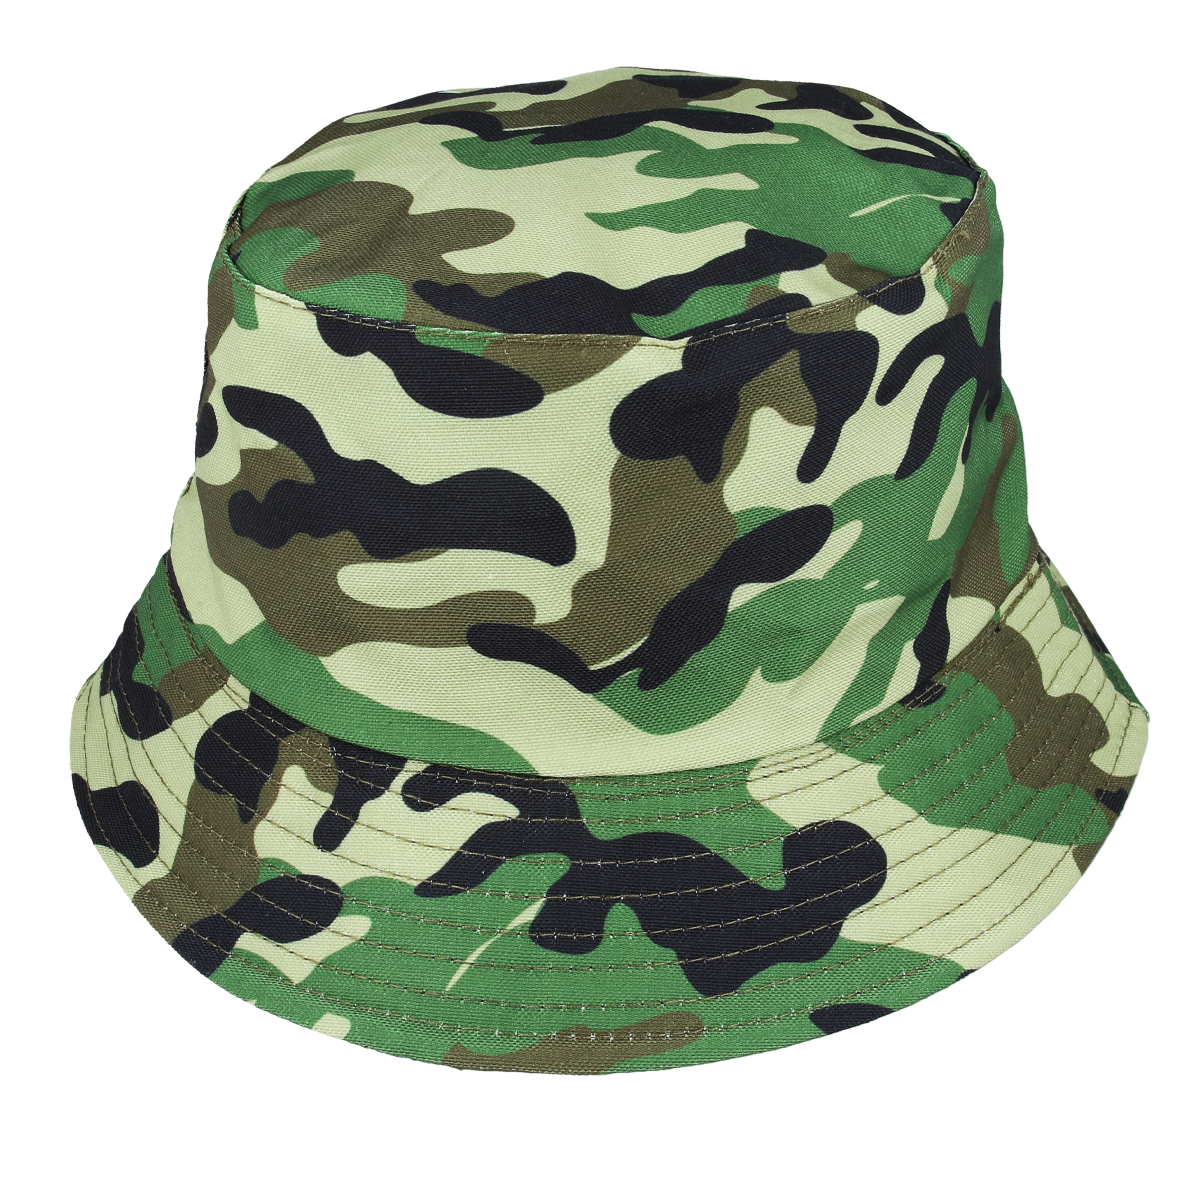 https://stylehats.co.uk/wp-content/uploads/2022/07/Bucket-hat-camofluge-black-sun-cap.png